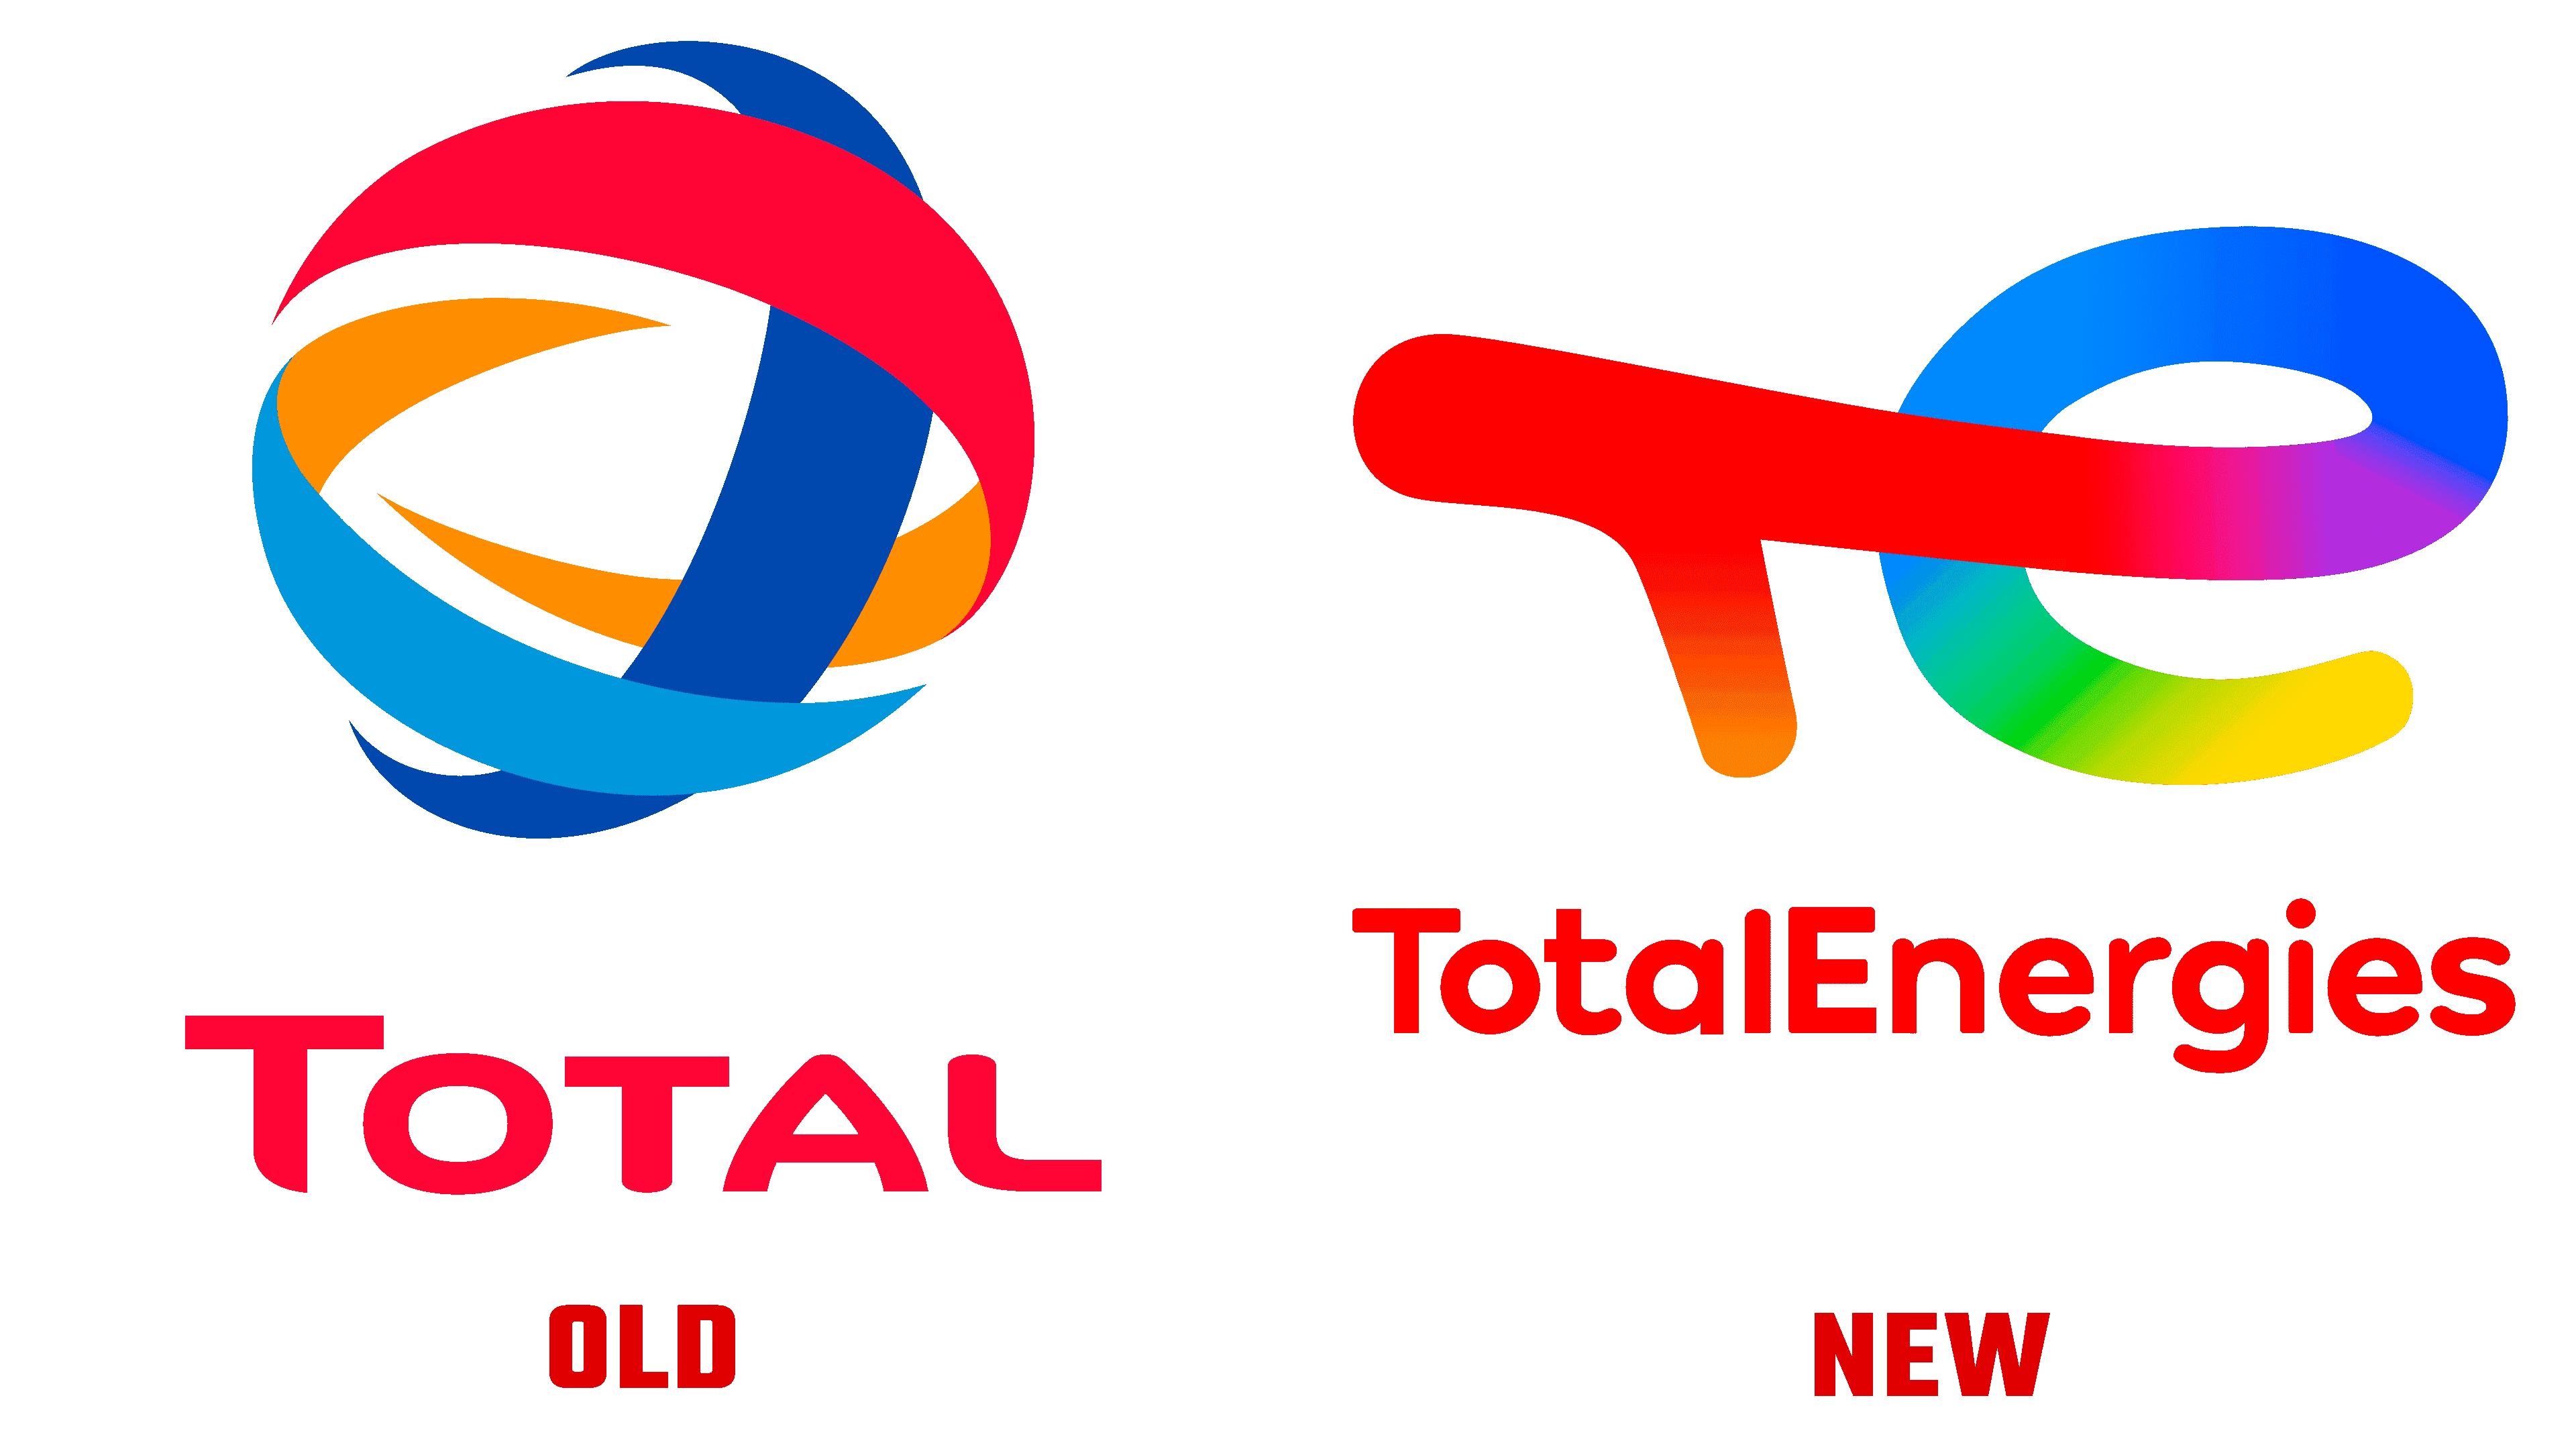 File:Total Produce logo.svg - Wikipedia